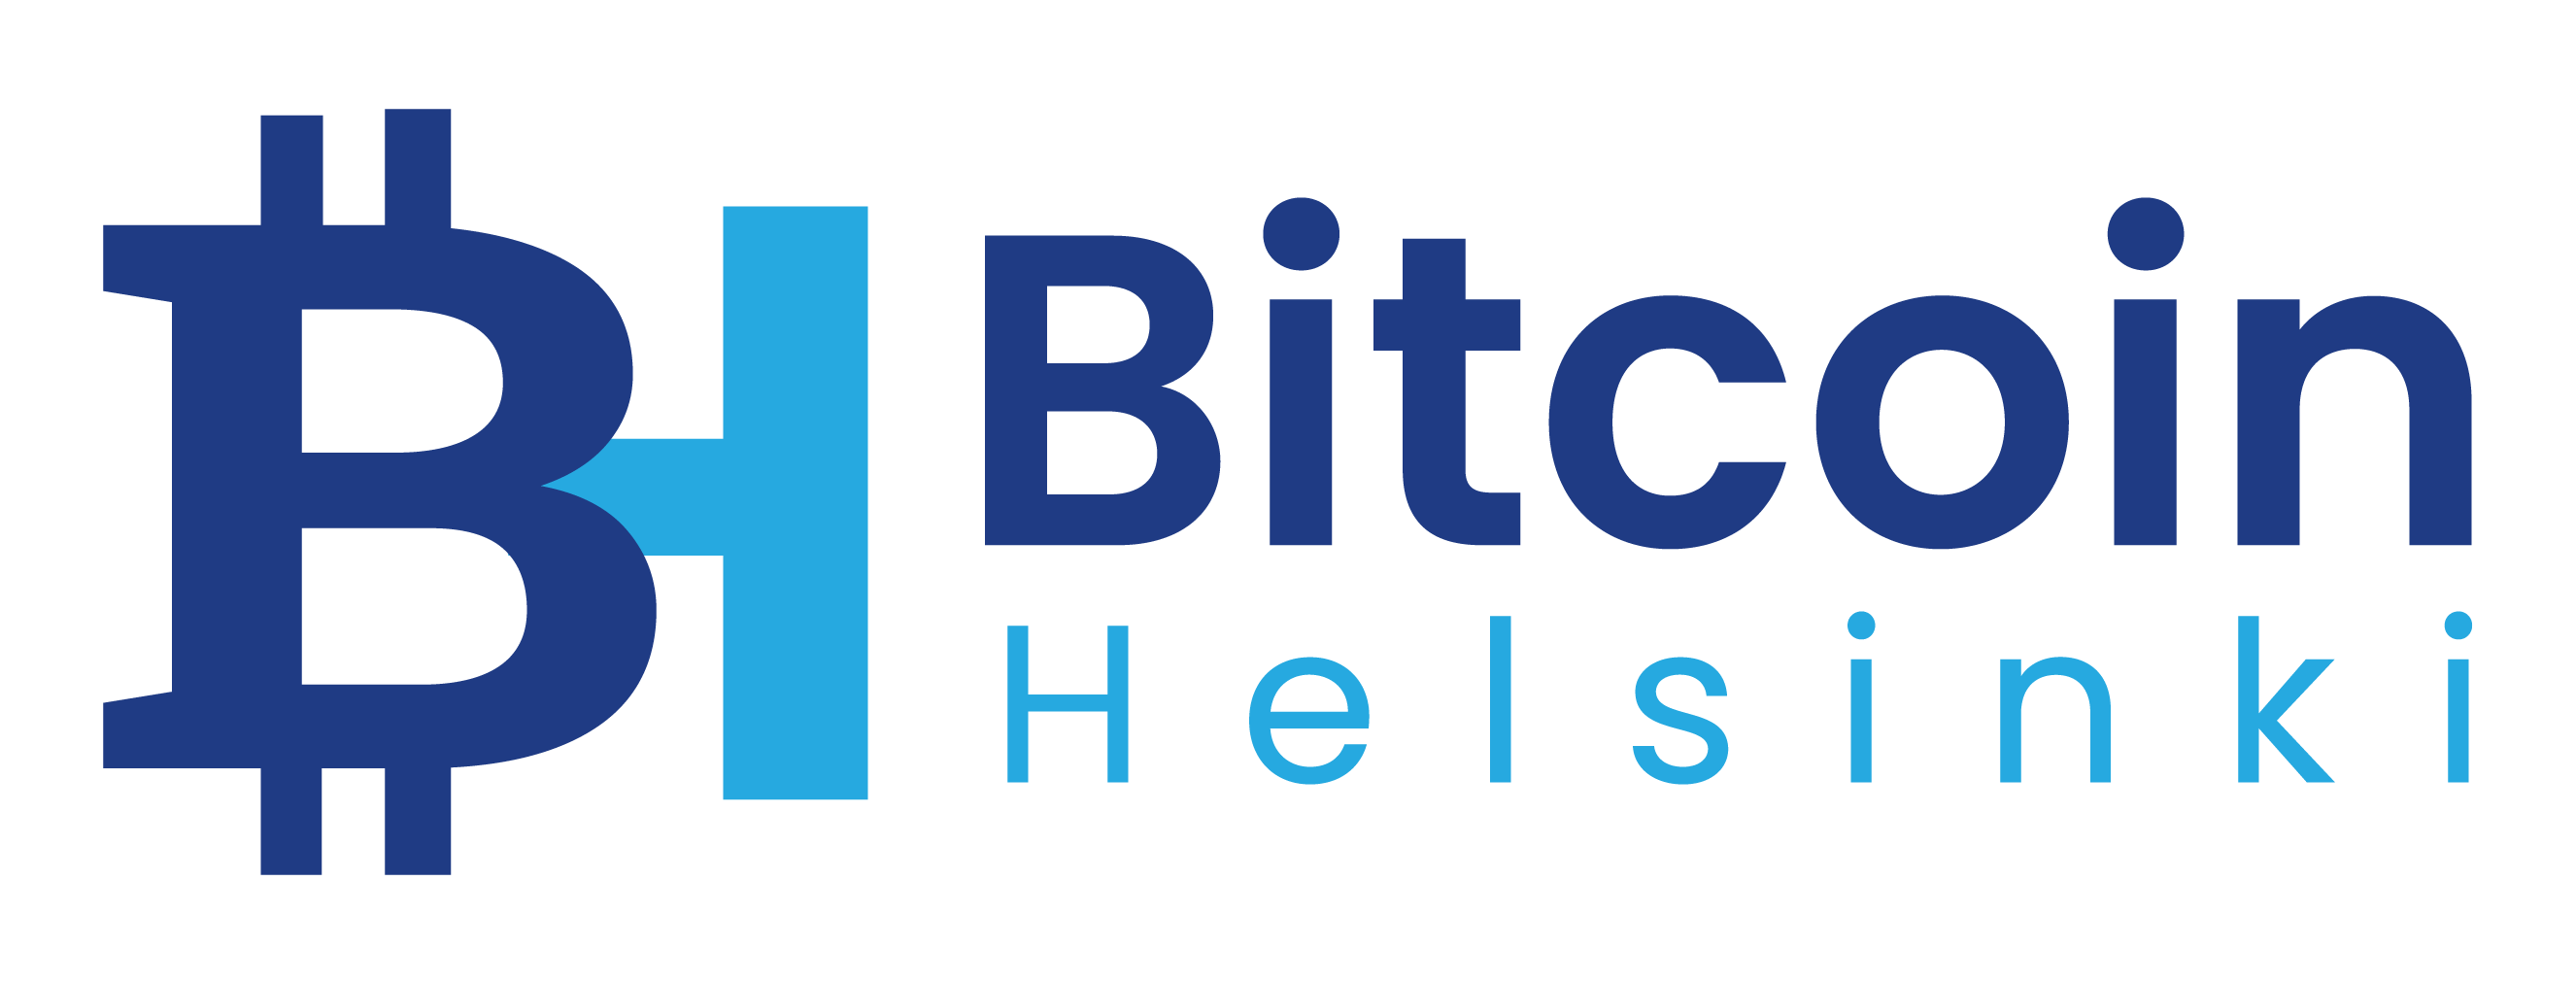 Bitcoin Helsinki - Команда Bitcoin Helsinki